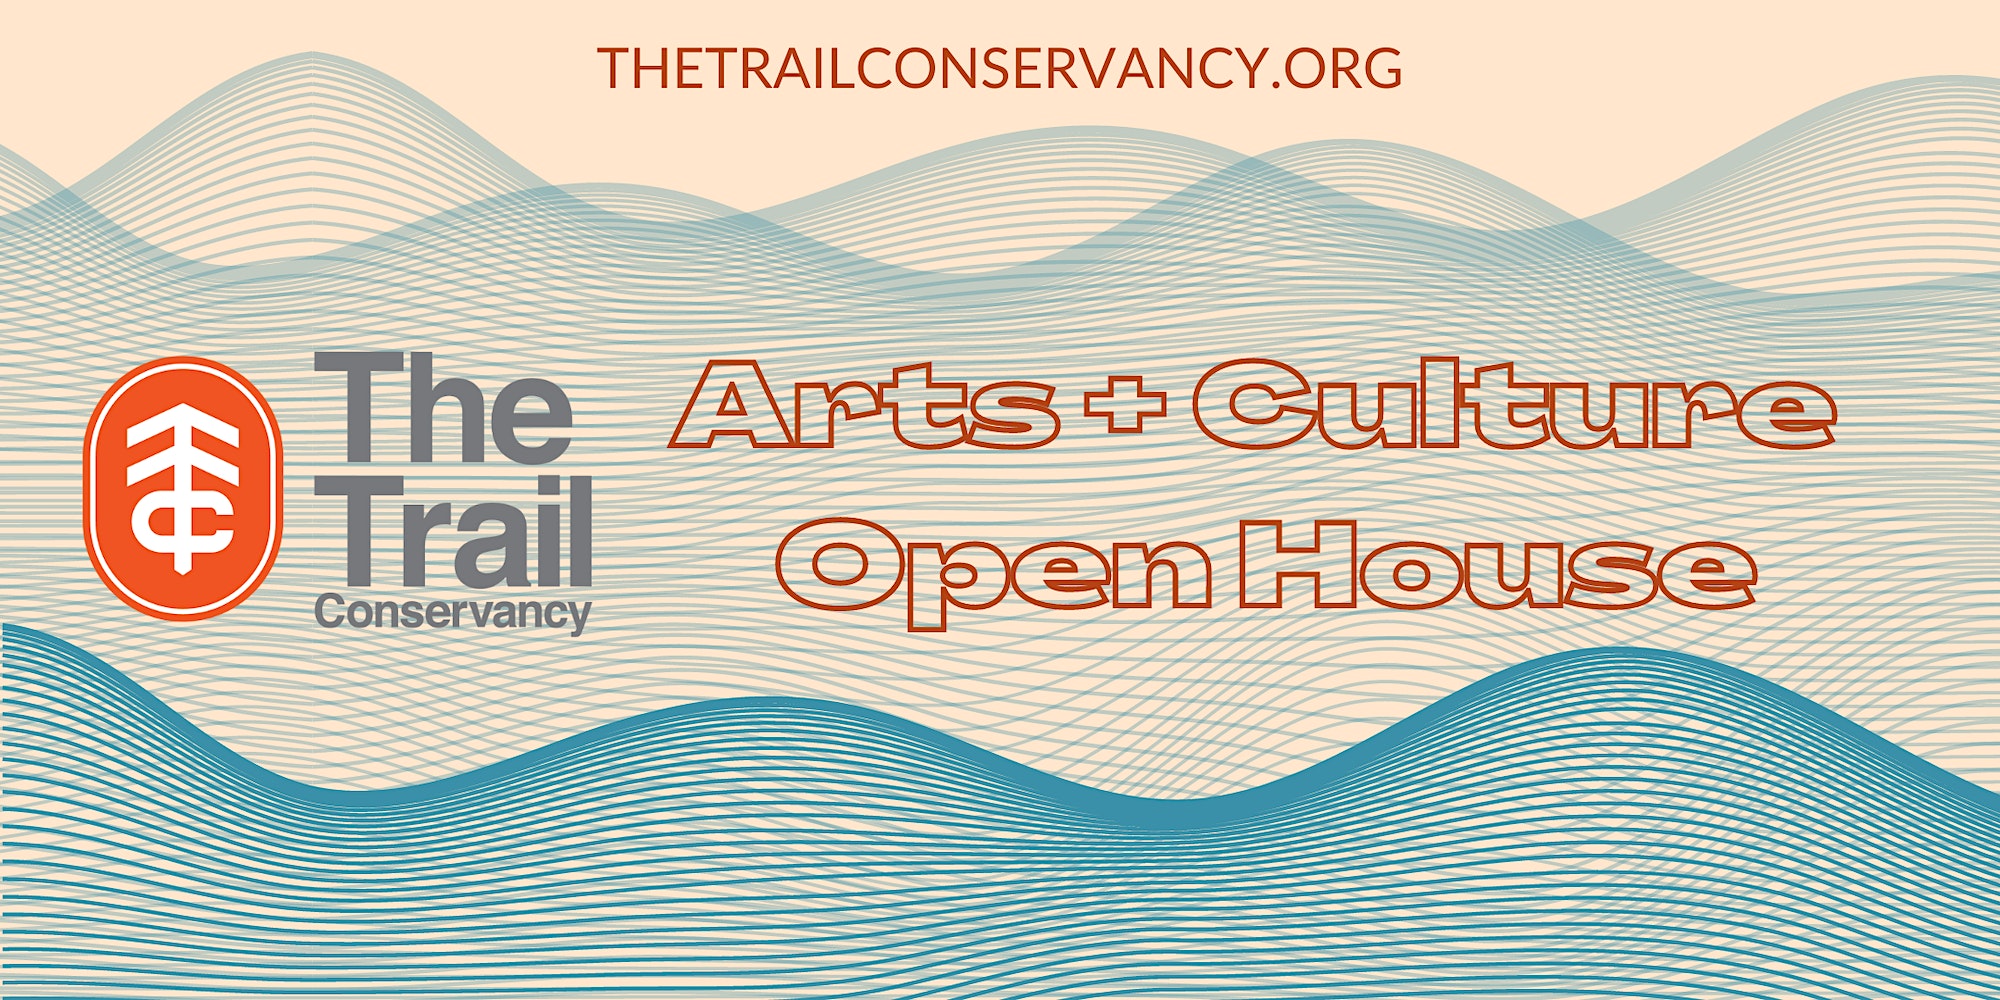 Arts + Culture Open House